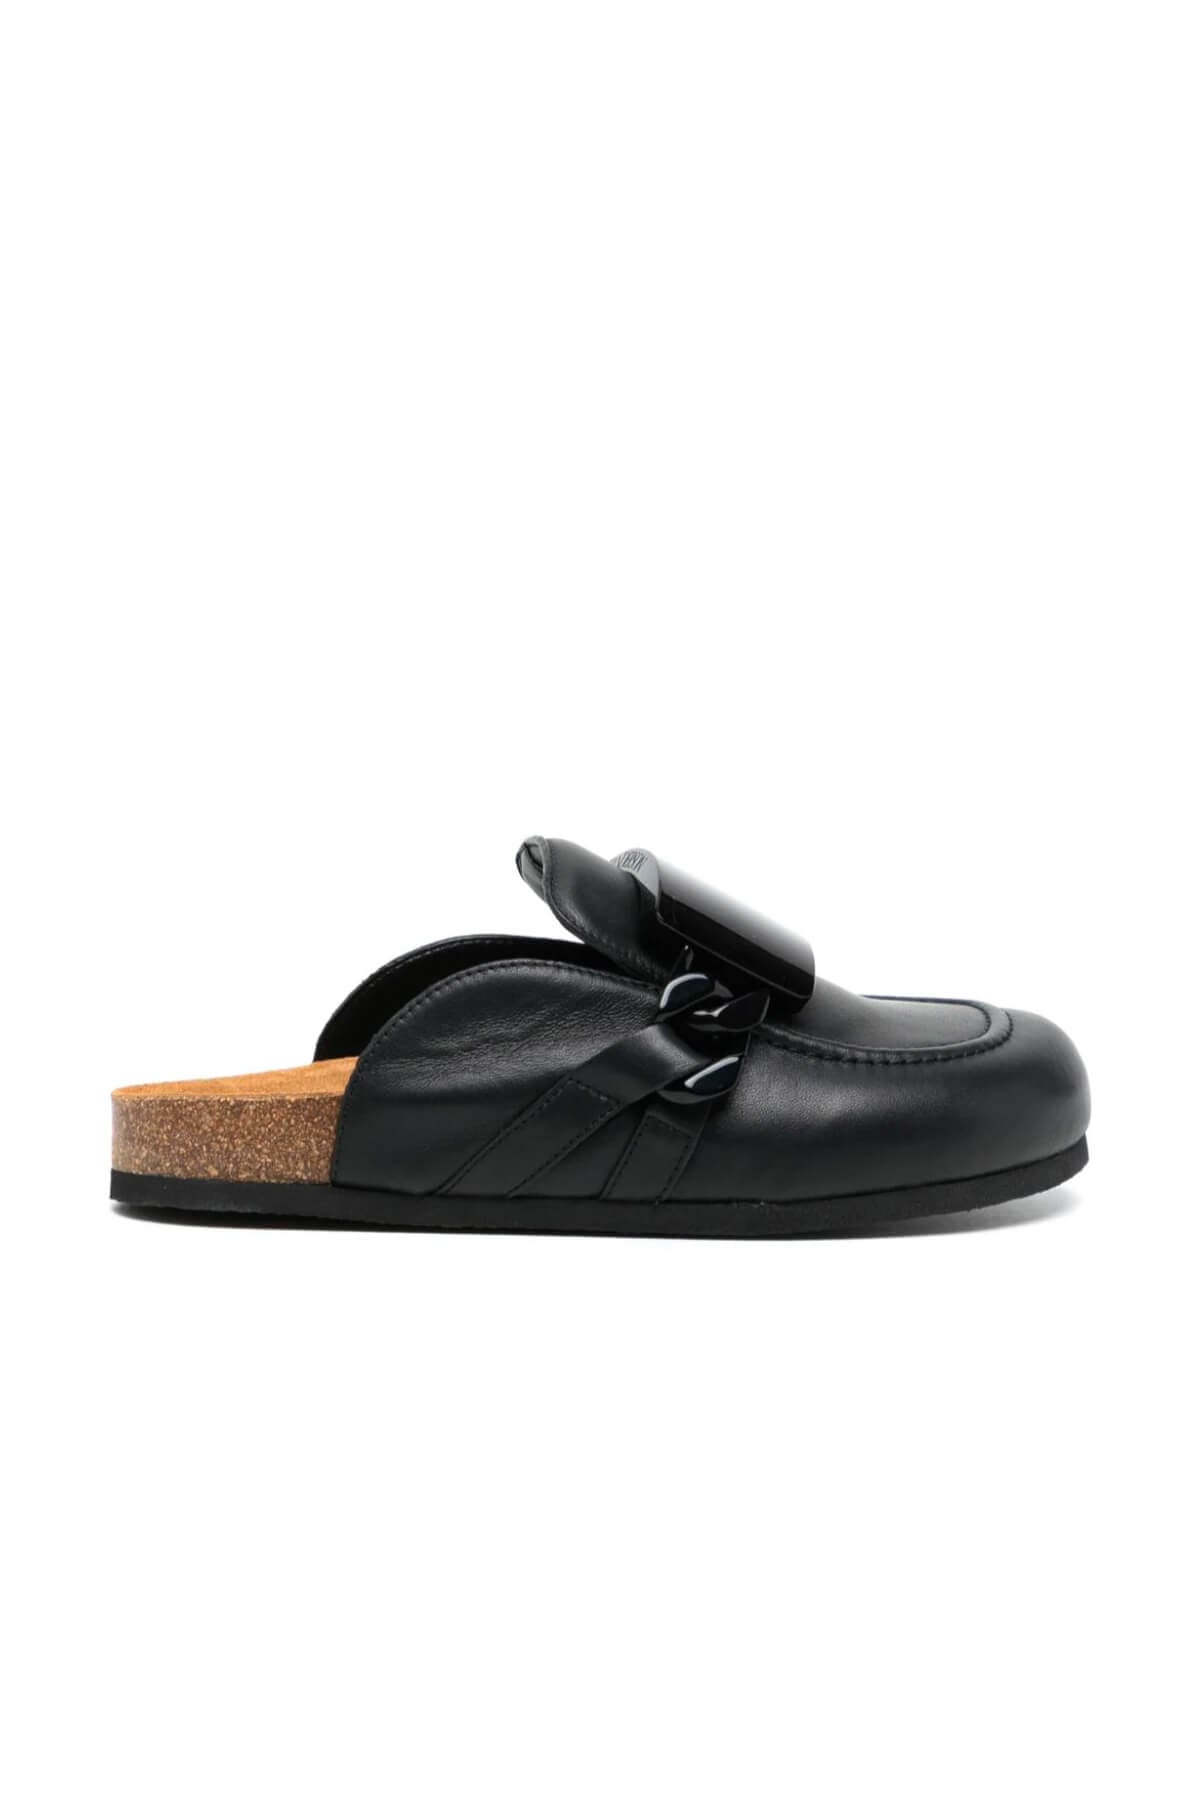 JW Anderson	Gourmet Loafer - Black